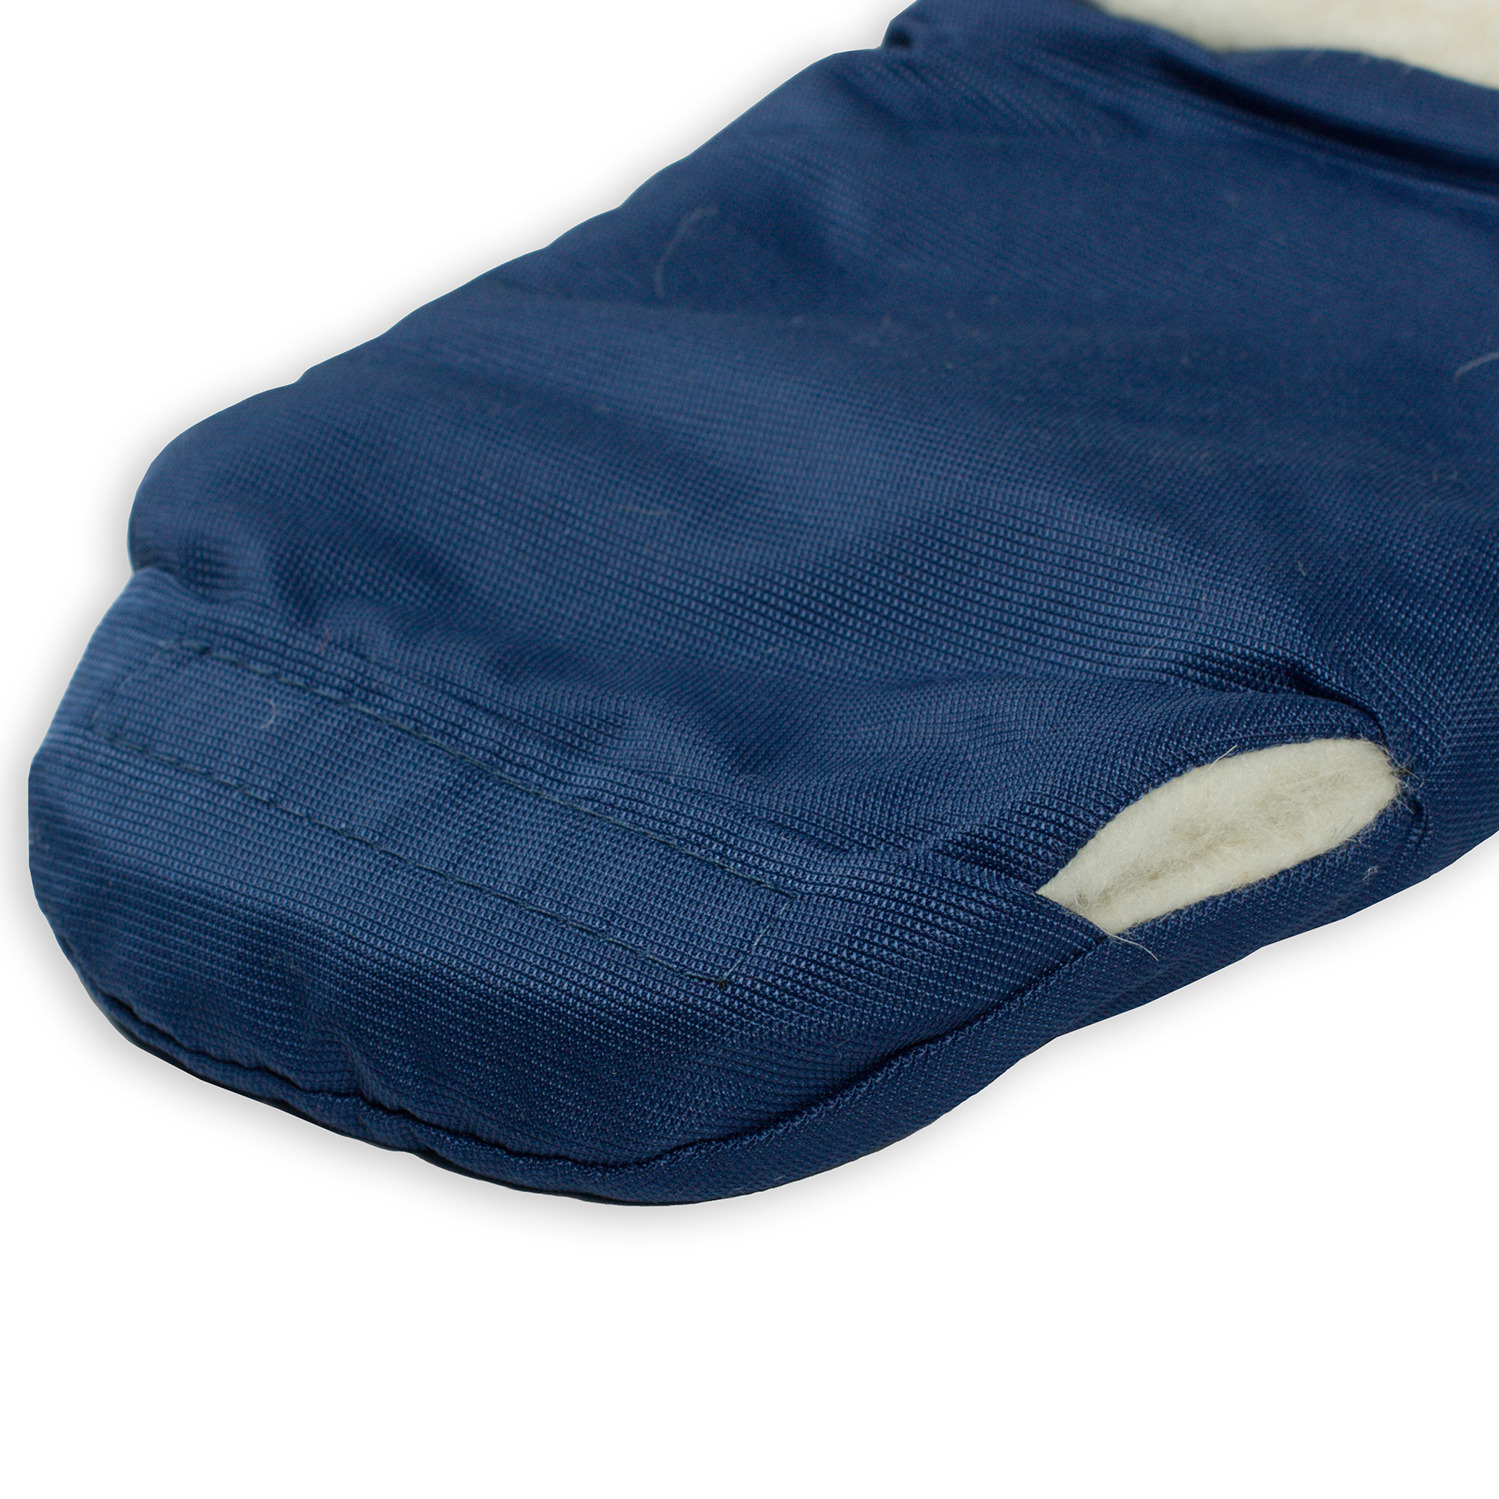 Муфта-рукавички для коляски Чудо-чадо меховая Прайм синяя МРМ03-001 - фото 7